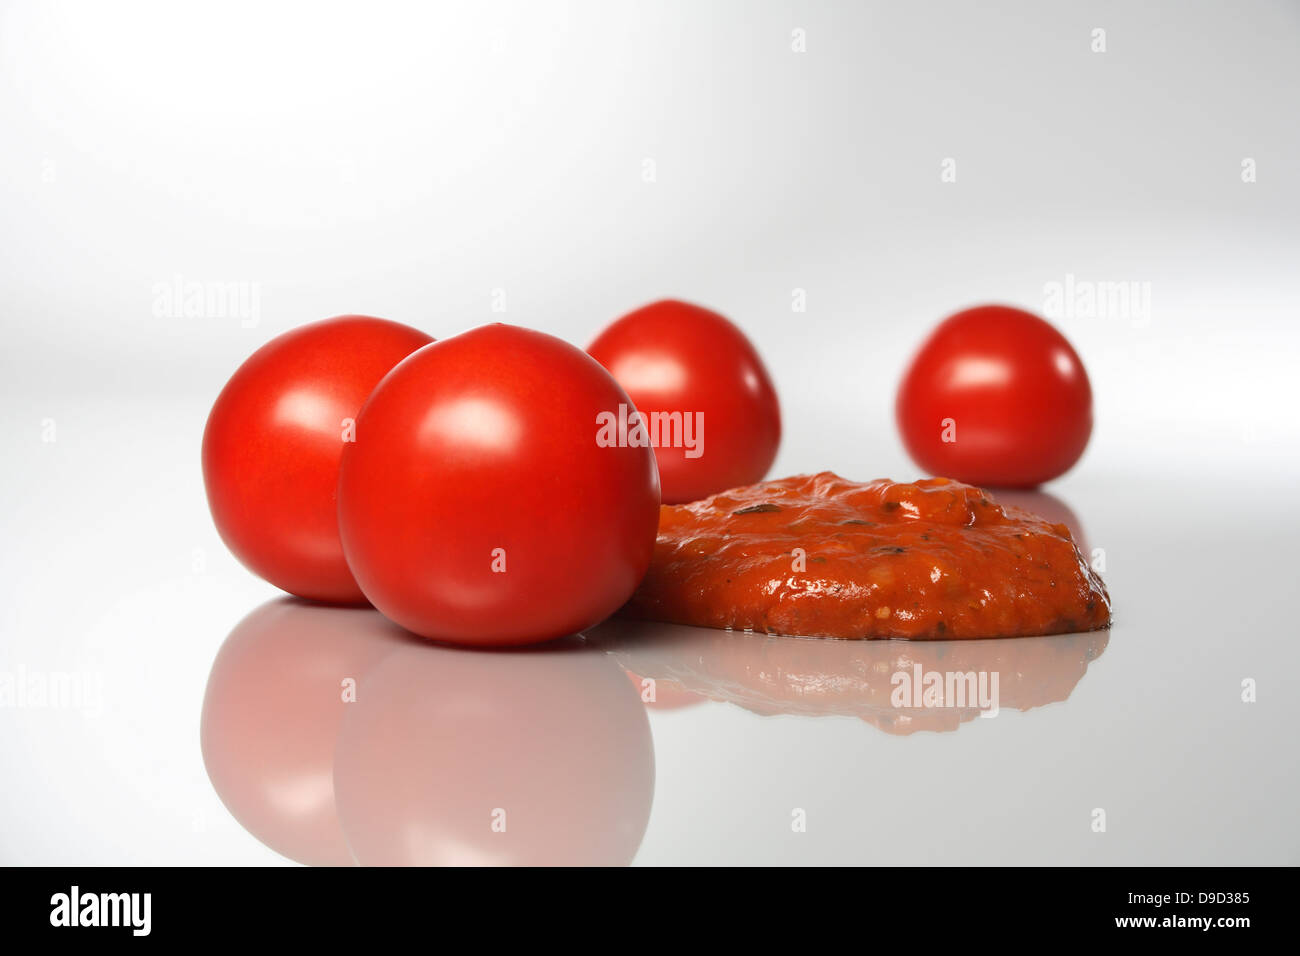 Tomatoes and tomato sauce Stock Photo